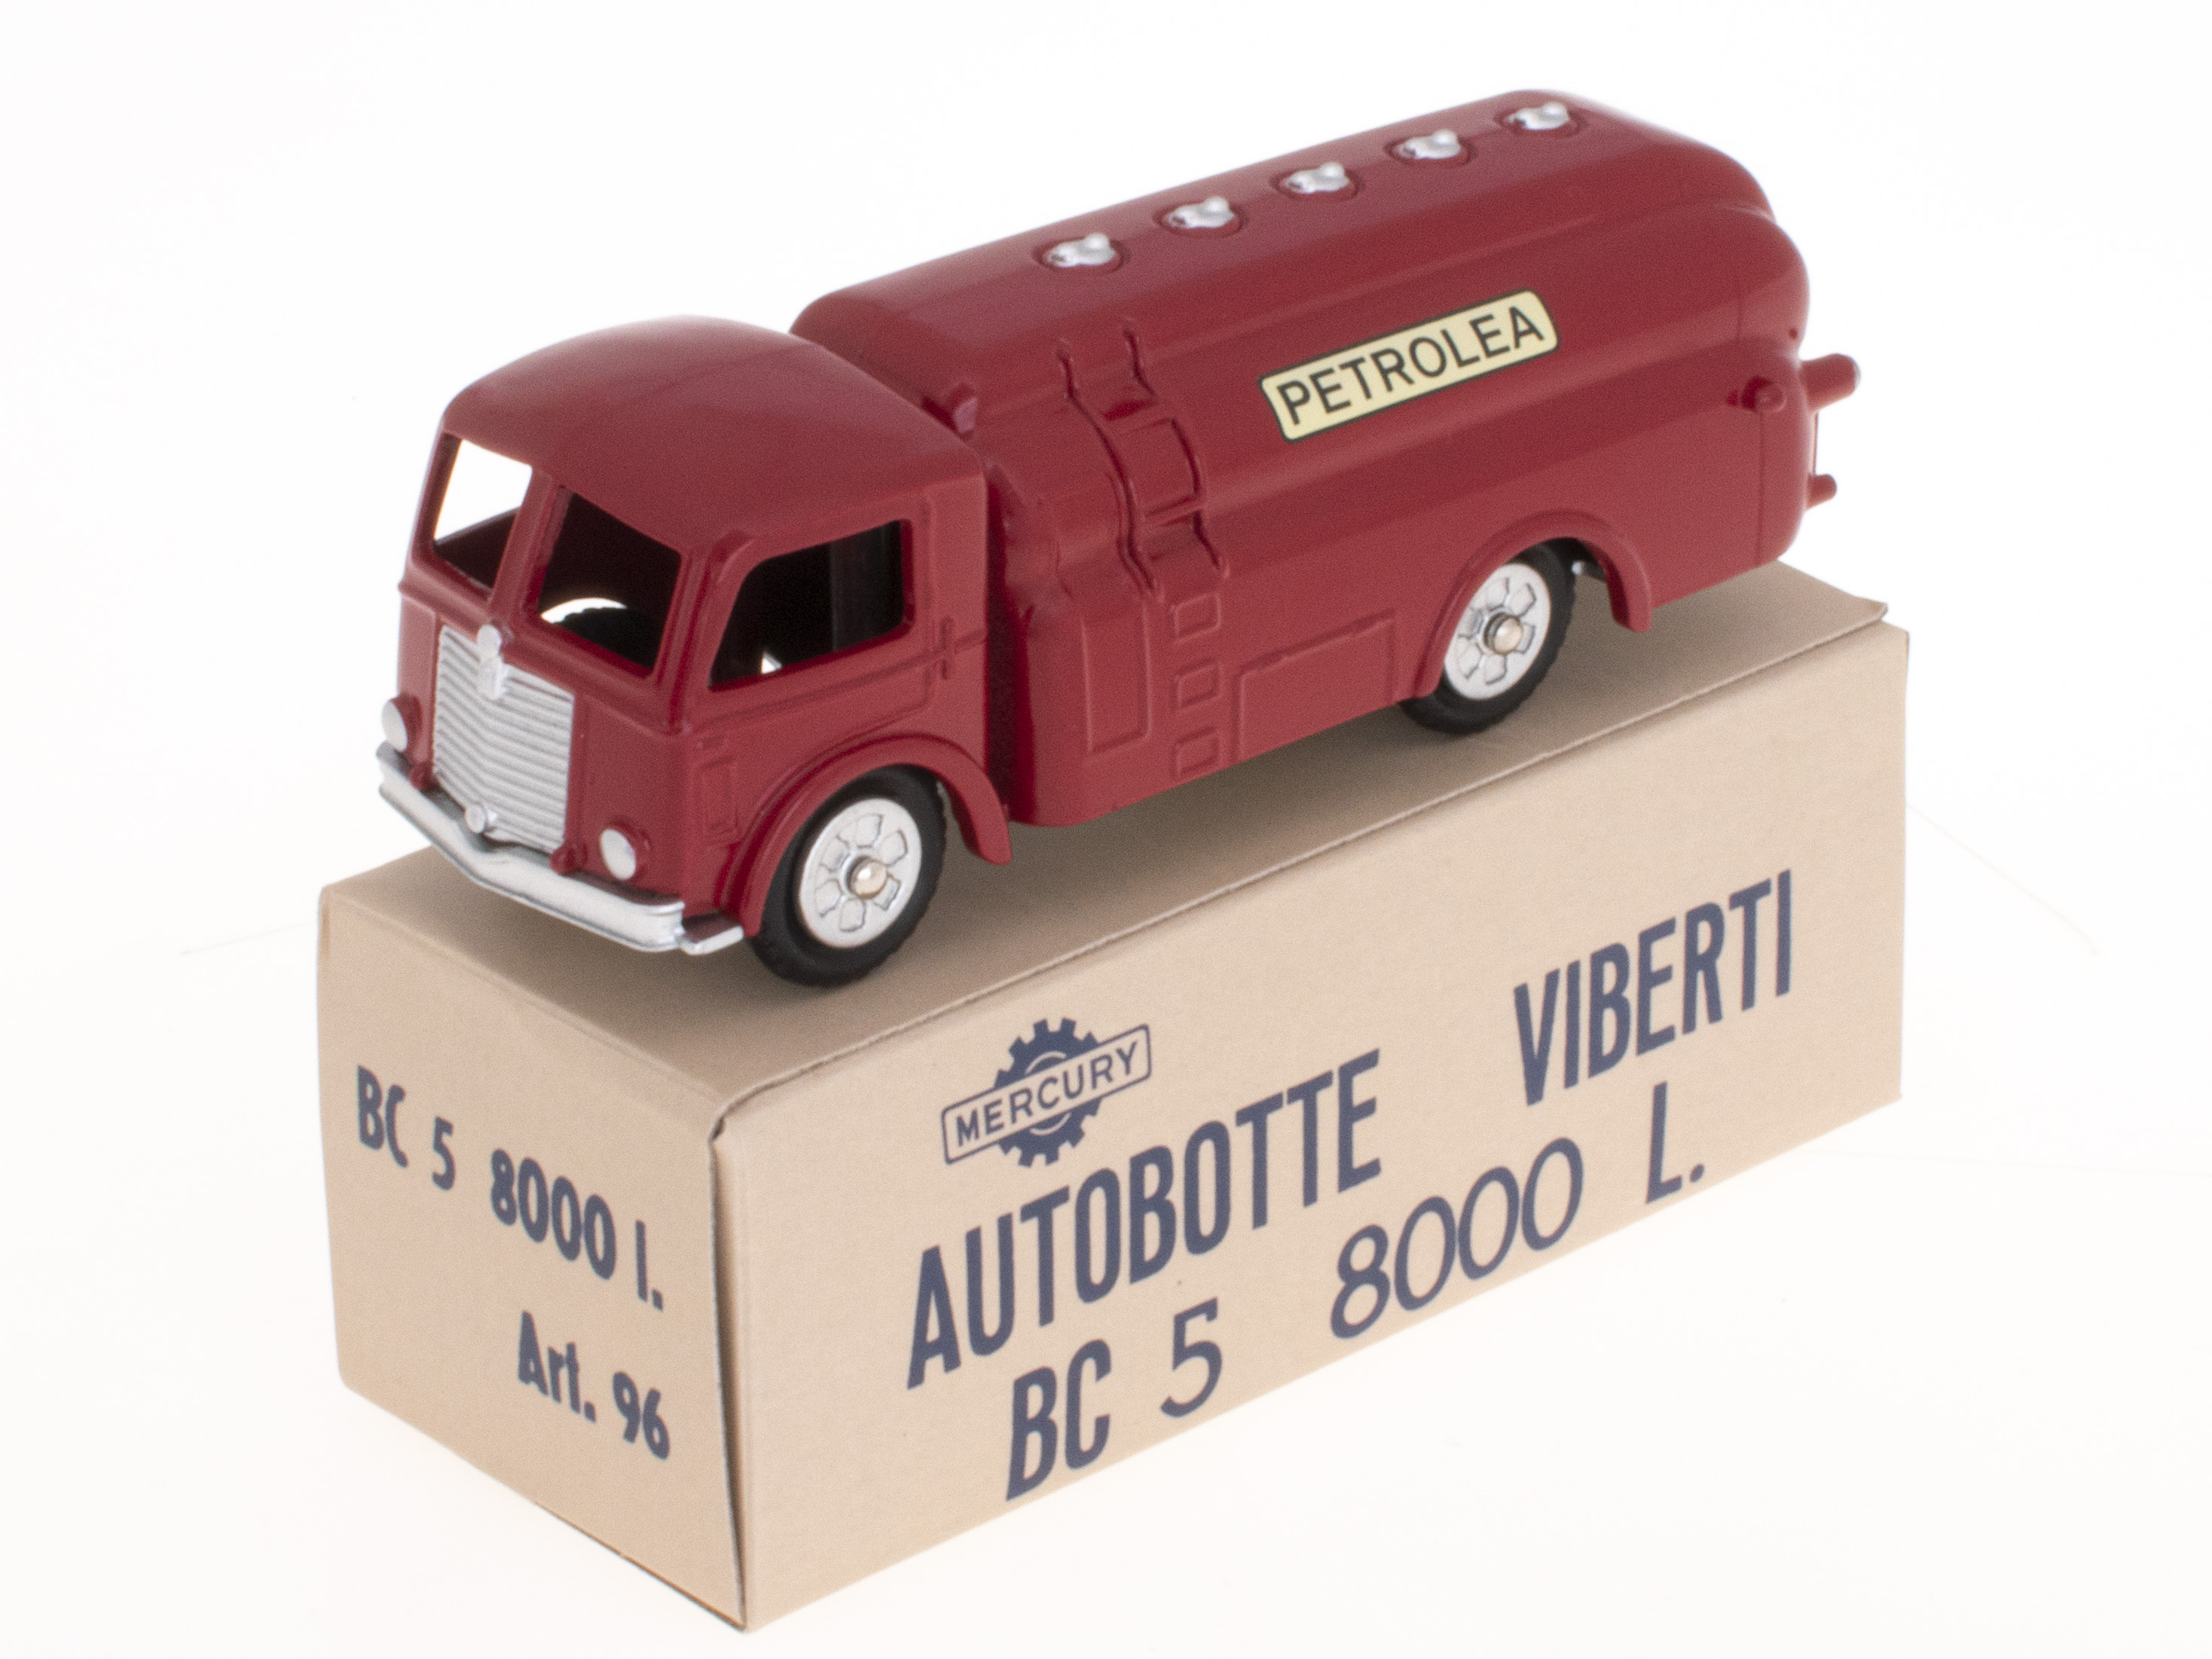 Autobotte Viberti BC 5 8000 L.